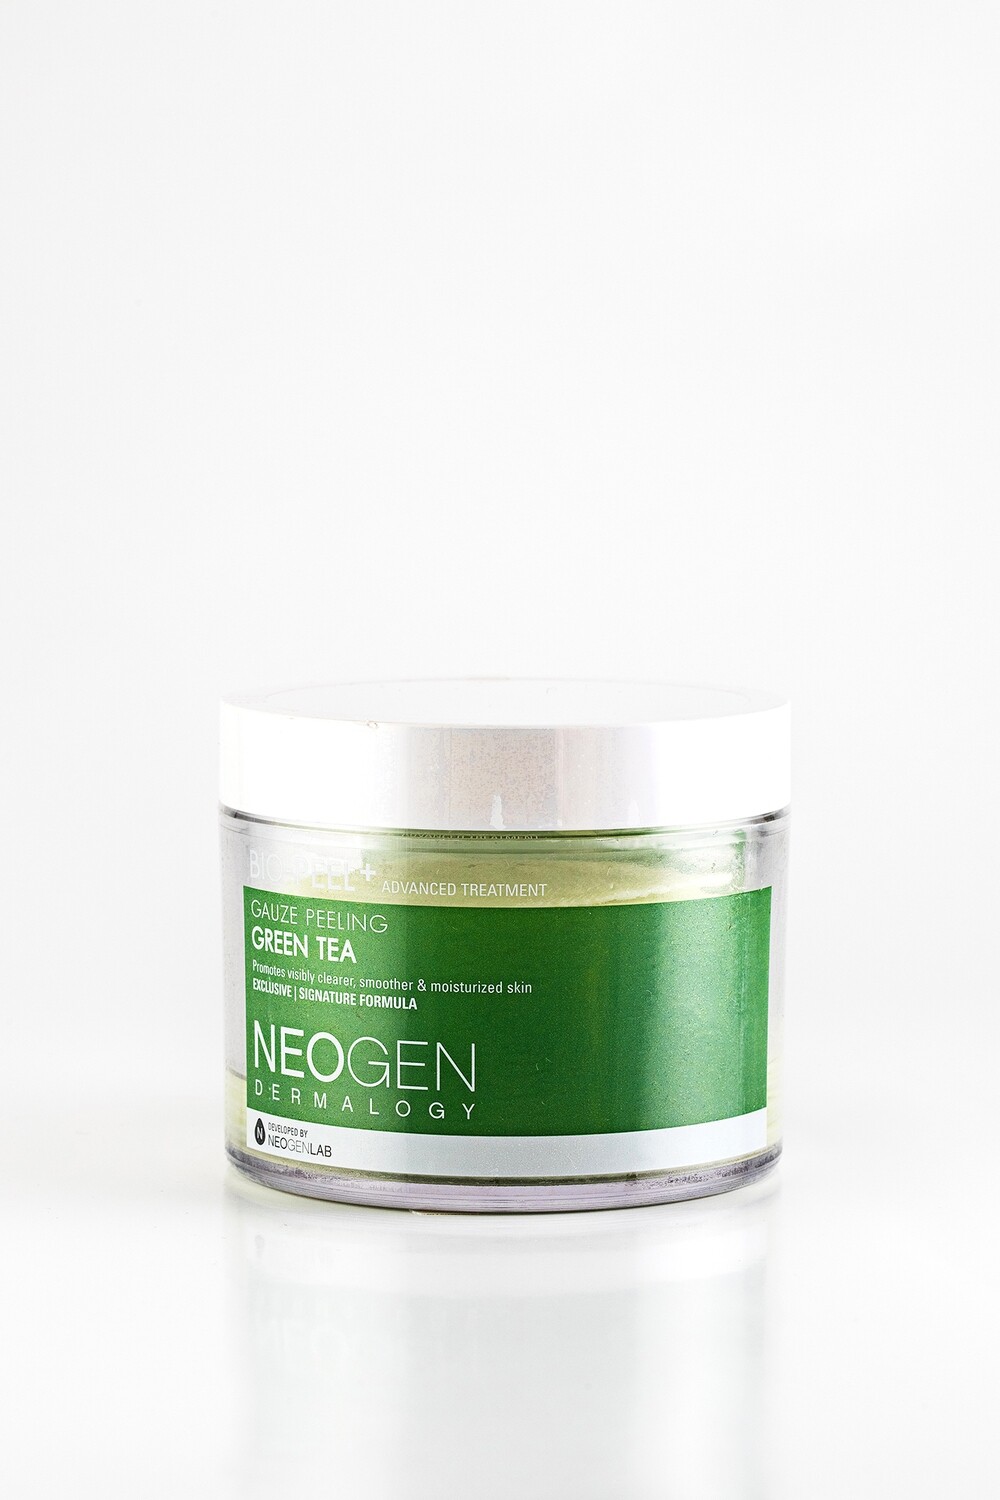 Neogen Bio-Peel Gauze Peeling Green Tea Exfoliating Pads